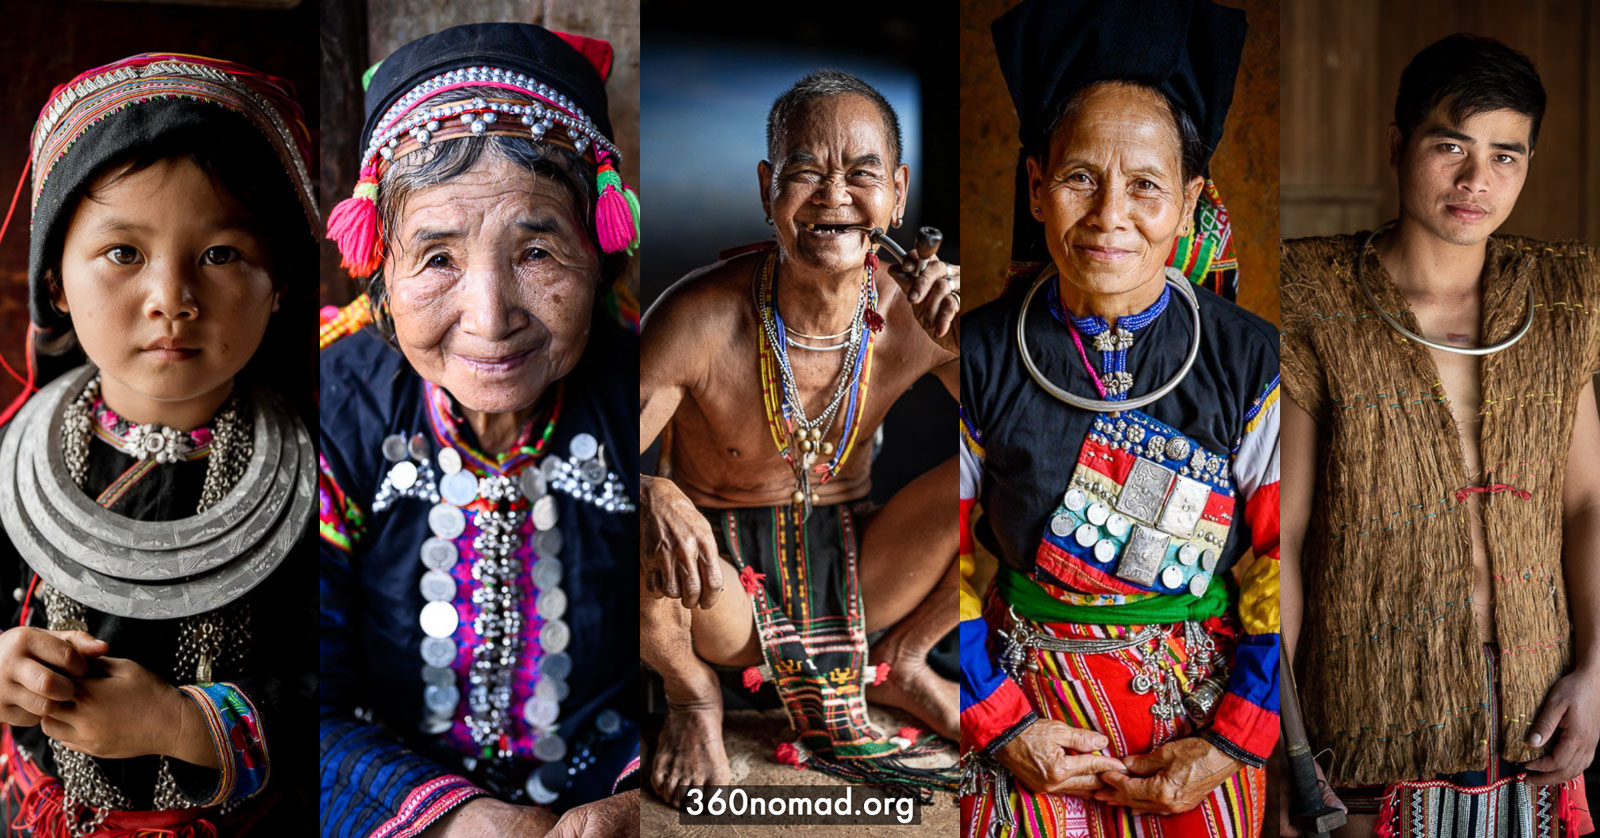 Photos reveal the beauty and diversity of Vietnams ethnic minorities